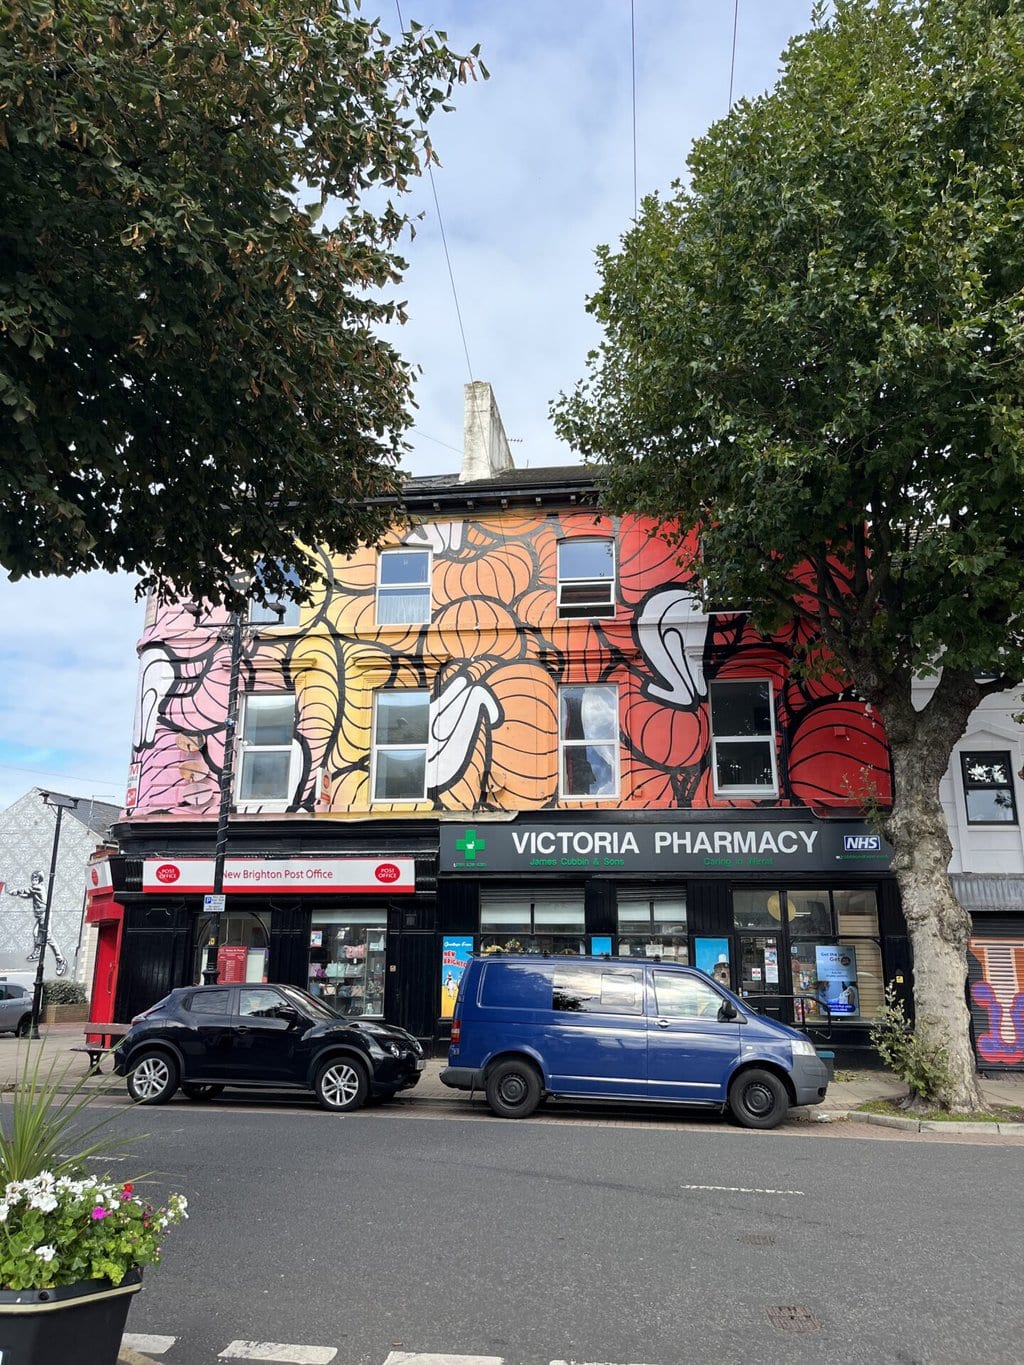 New Brighton Street Art Wirral 